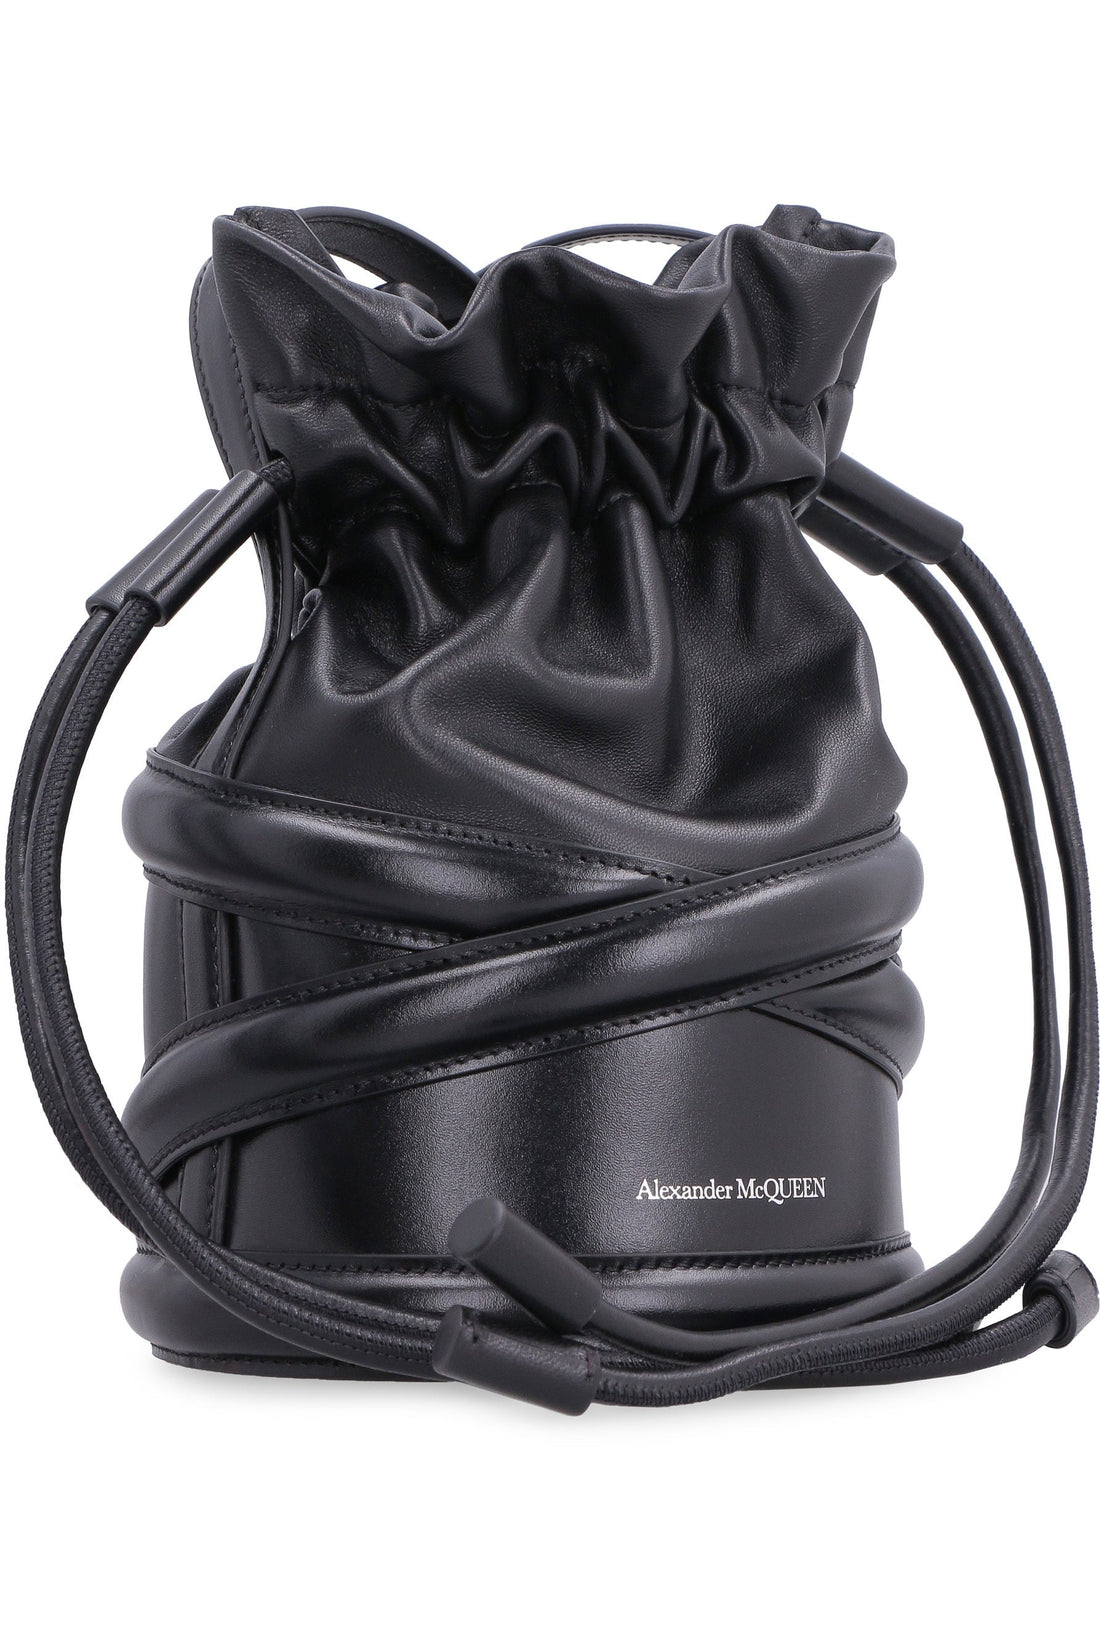 Alexander McQueen-OUTLET-SALE-The Soft Curve leather bucket bag-ARCHIVIST